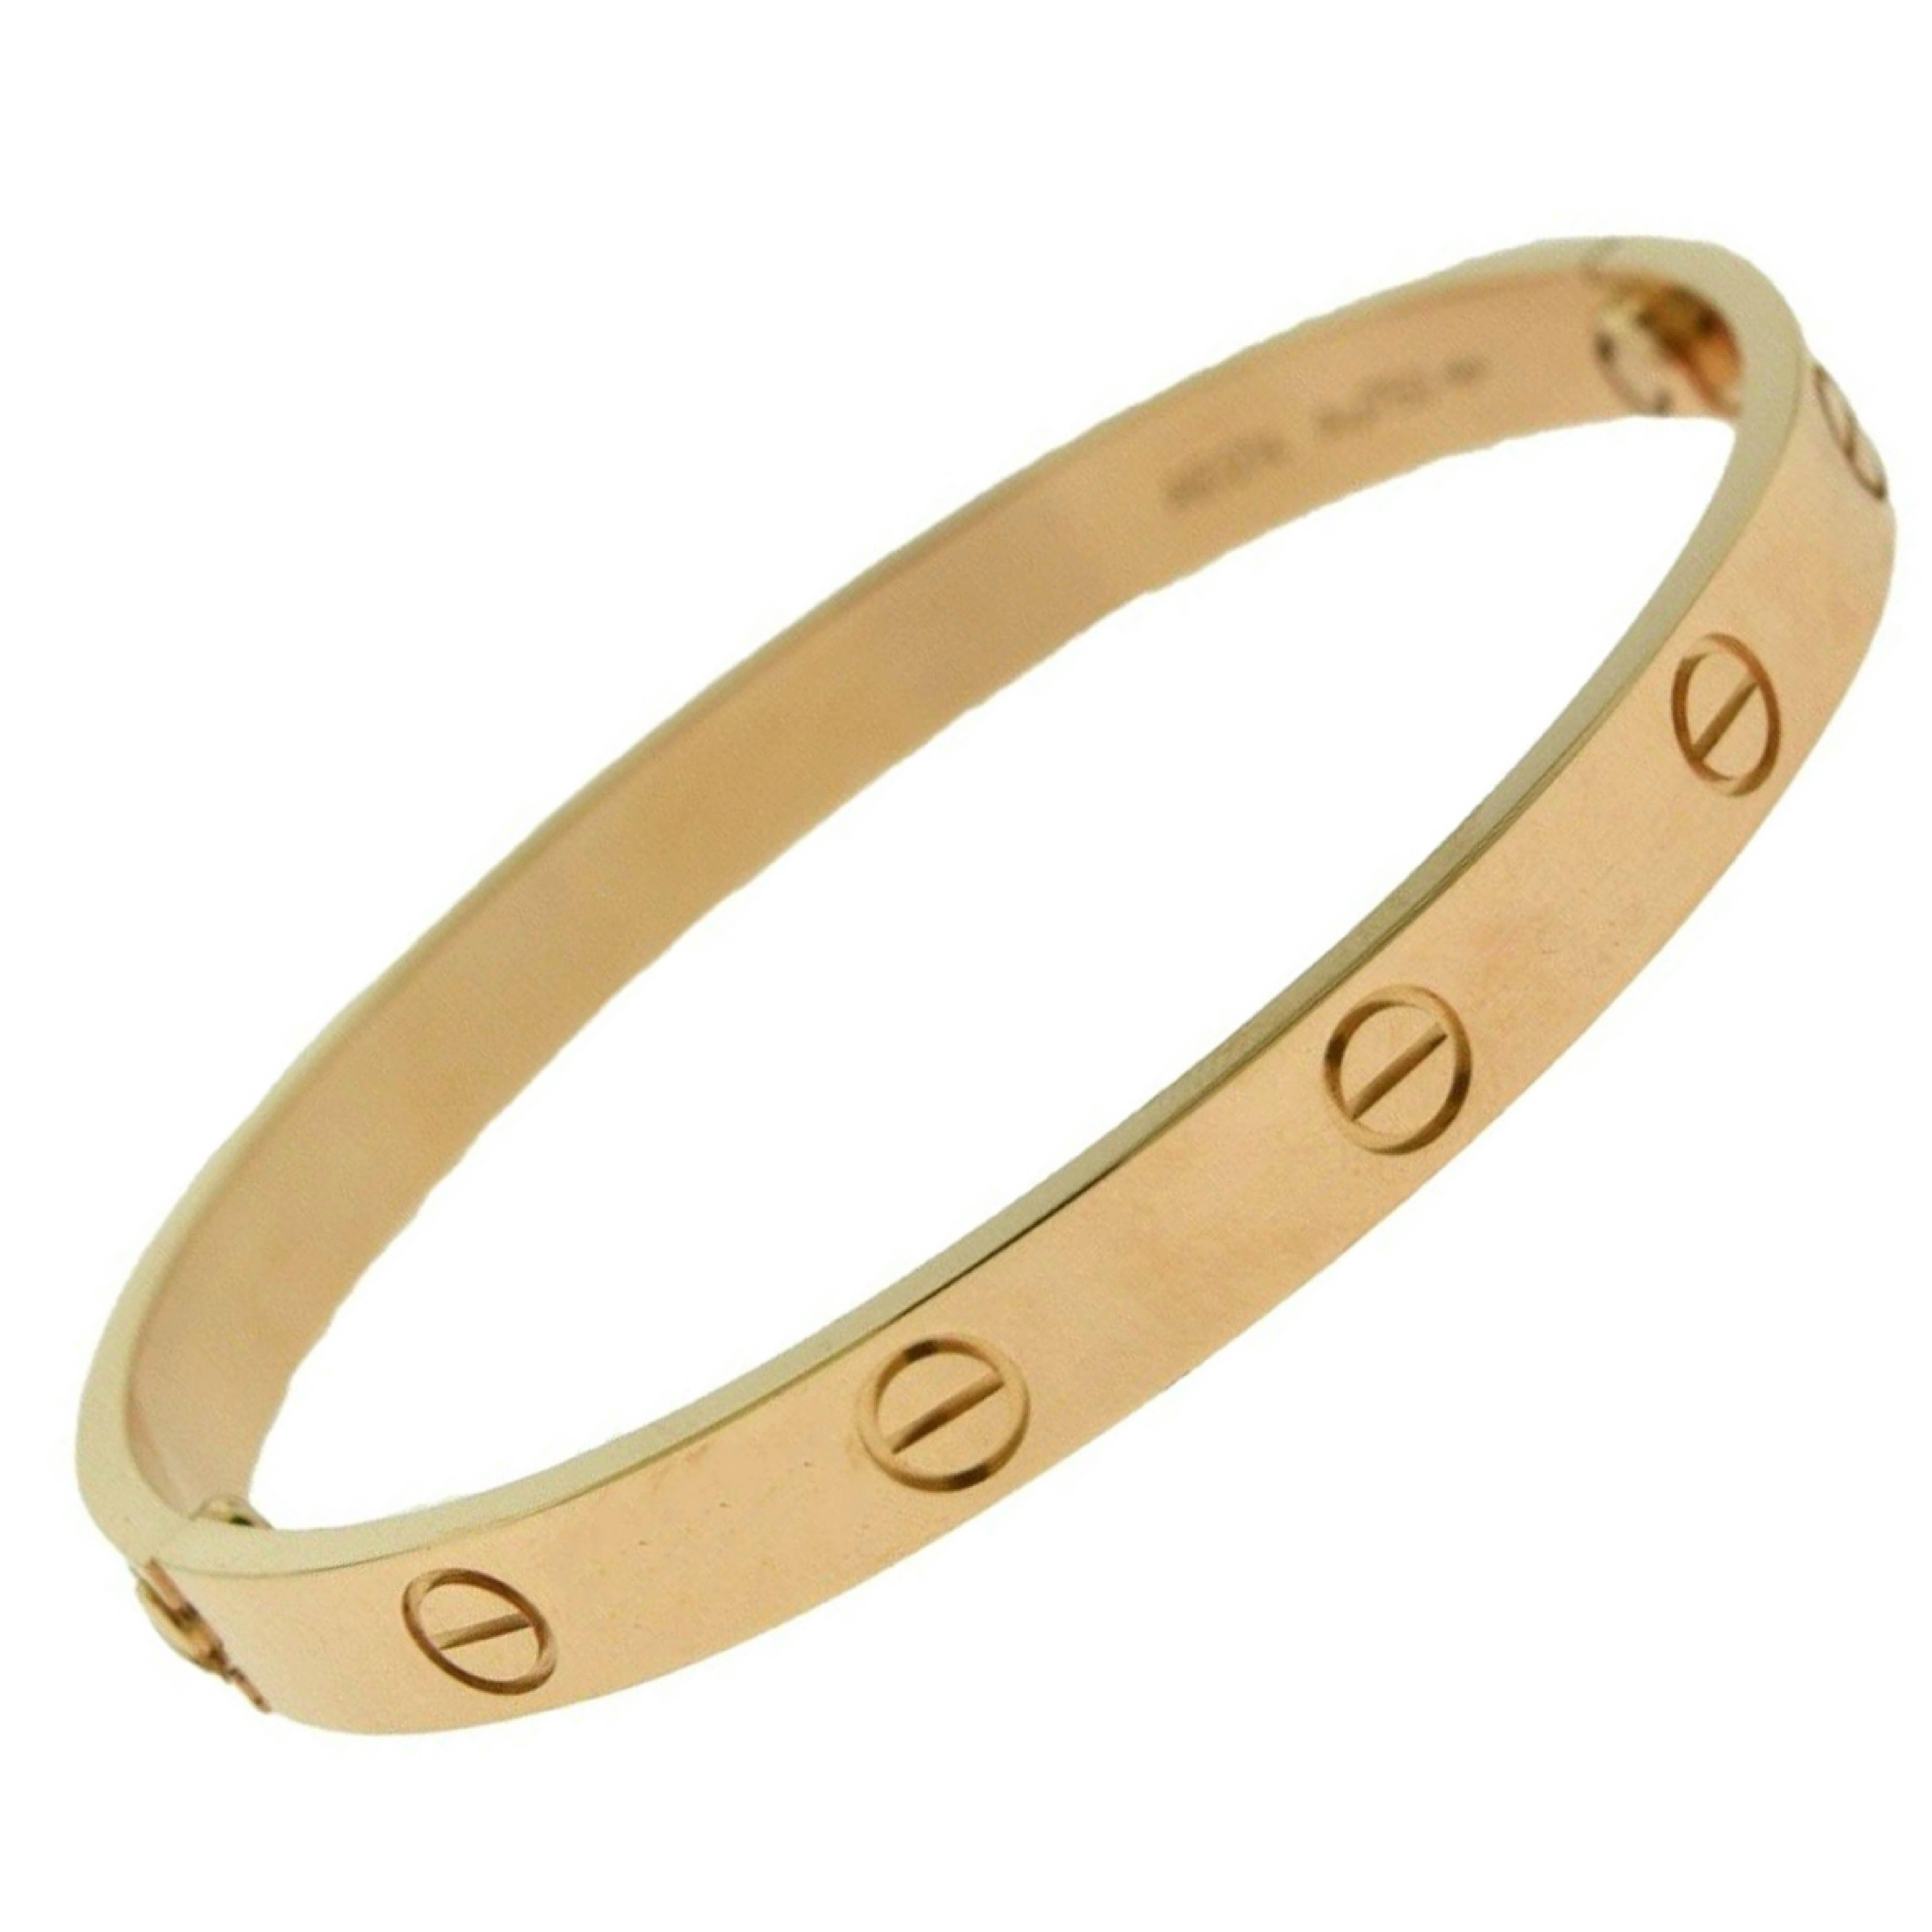 Designer: Cartier

Collection: Love

Style: Bracelet/ Bangle 

Metal: Rose Gold

Metal Purity: 18k 

Bracelet Size: 17 = 17 cm  

Hallmark:  Cartier;750, Serial No. 17

Includes: 24 Month Brilliance Jewels Warranty

                     Cartier Box